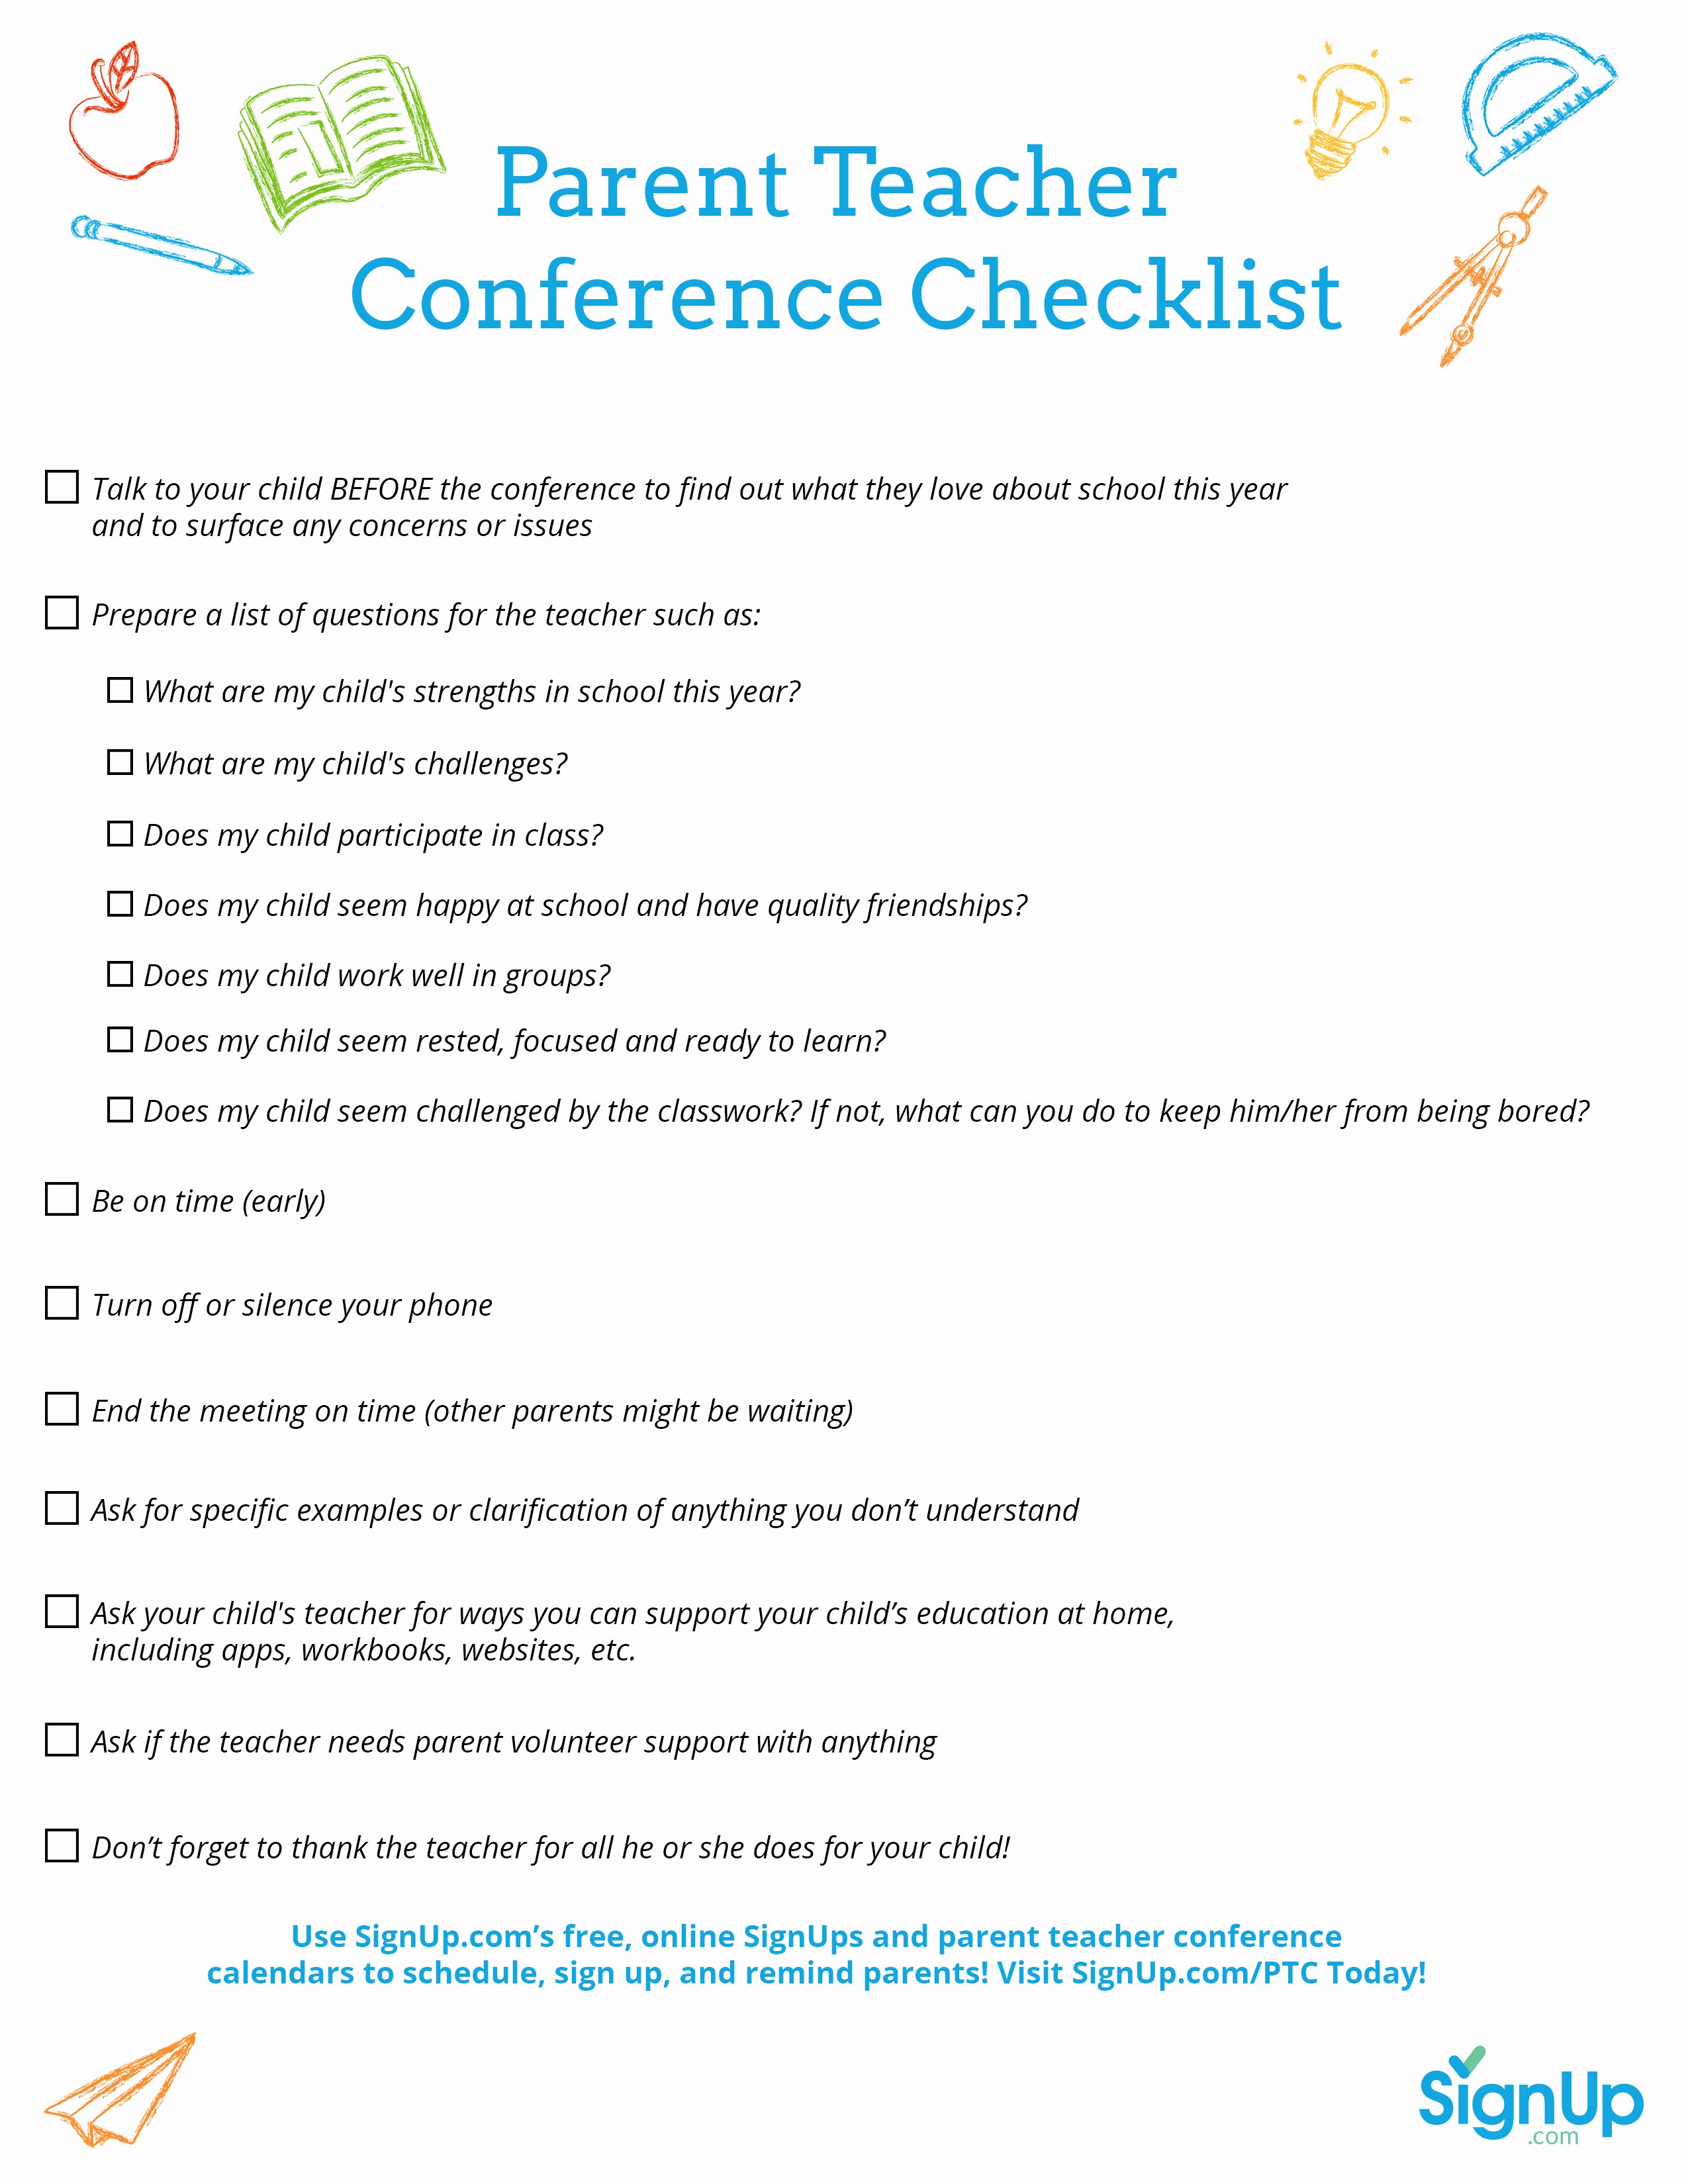 Parent Teacher Conference forms New Printable Checklist for Parent Teacher Conferences